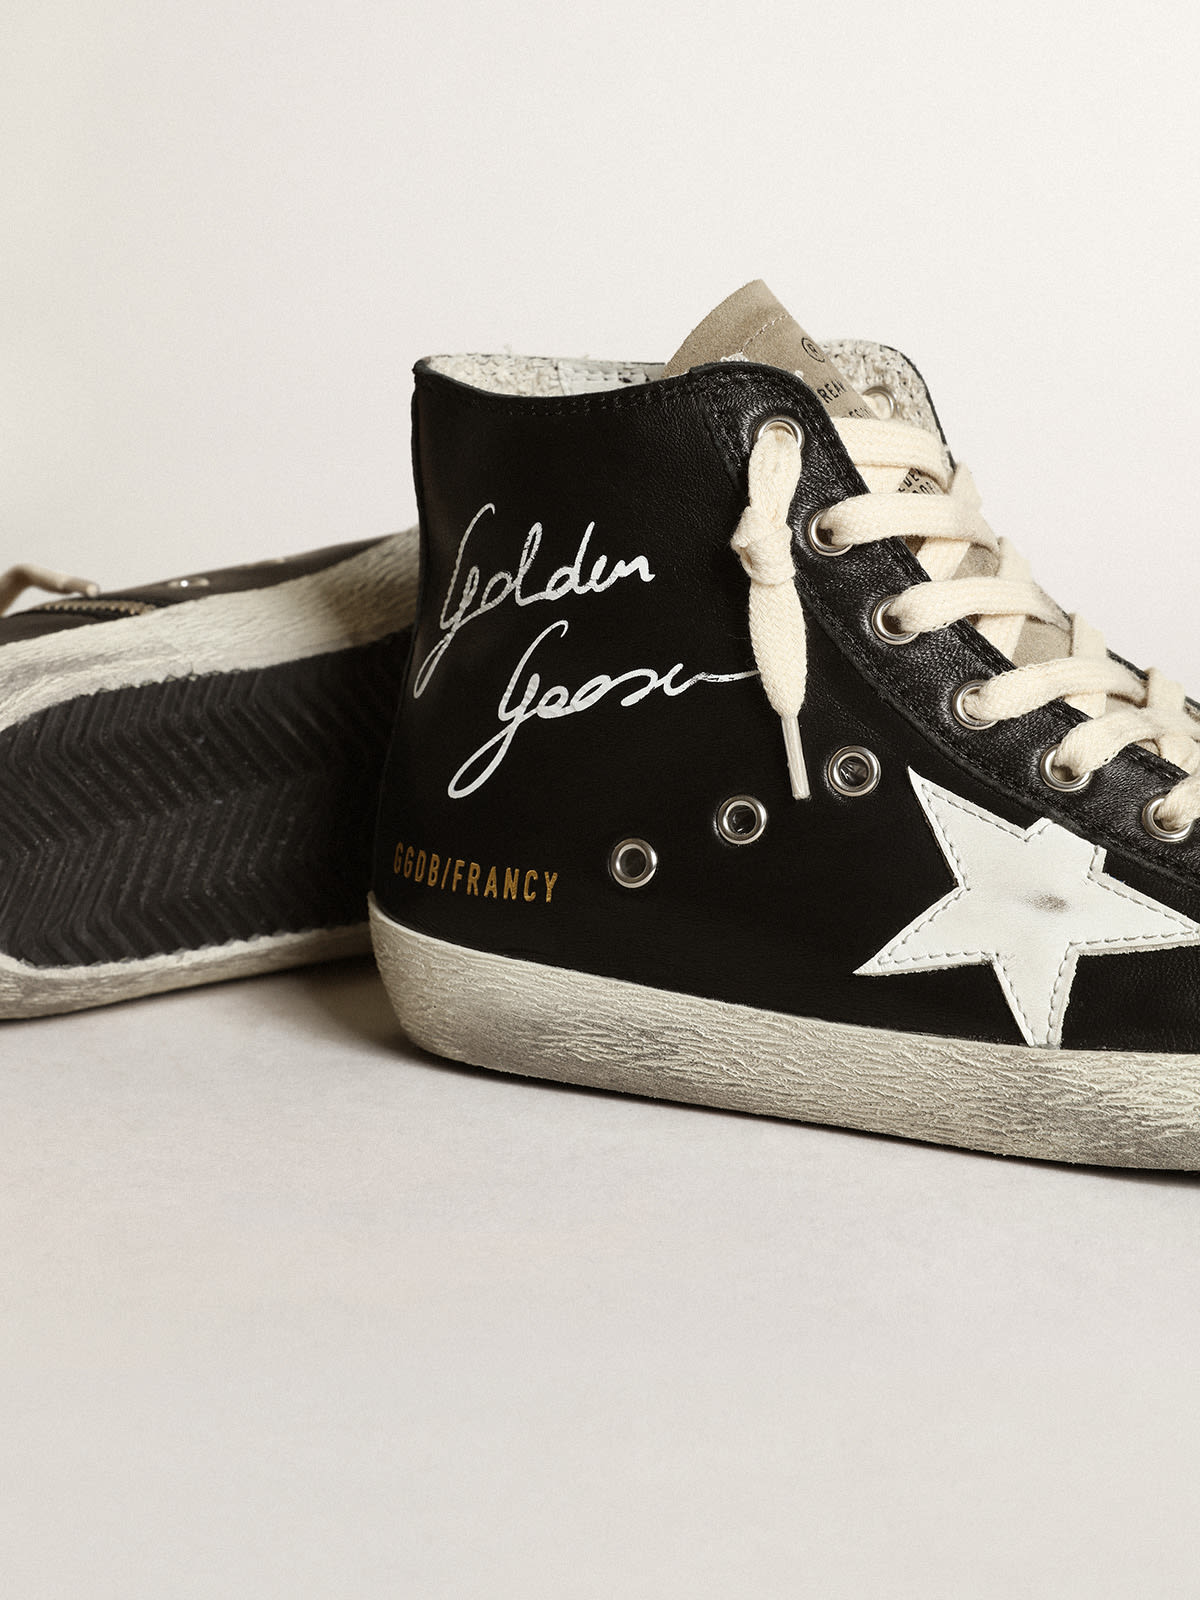 Golden Goose - Sneaker Francy in nappa nera con stella in pelle bianca e linguetta in suede color tortora in 